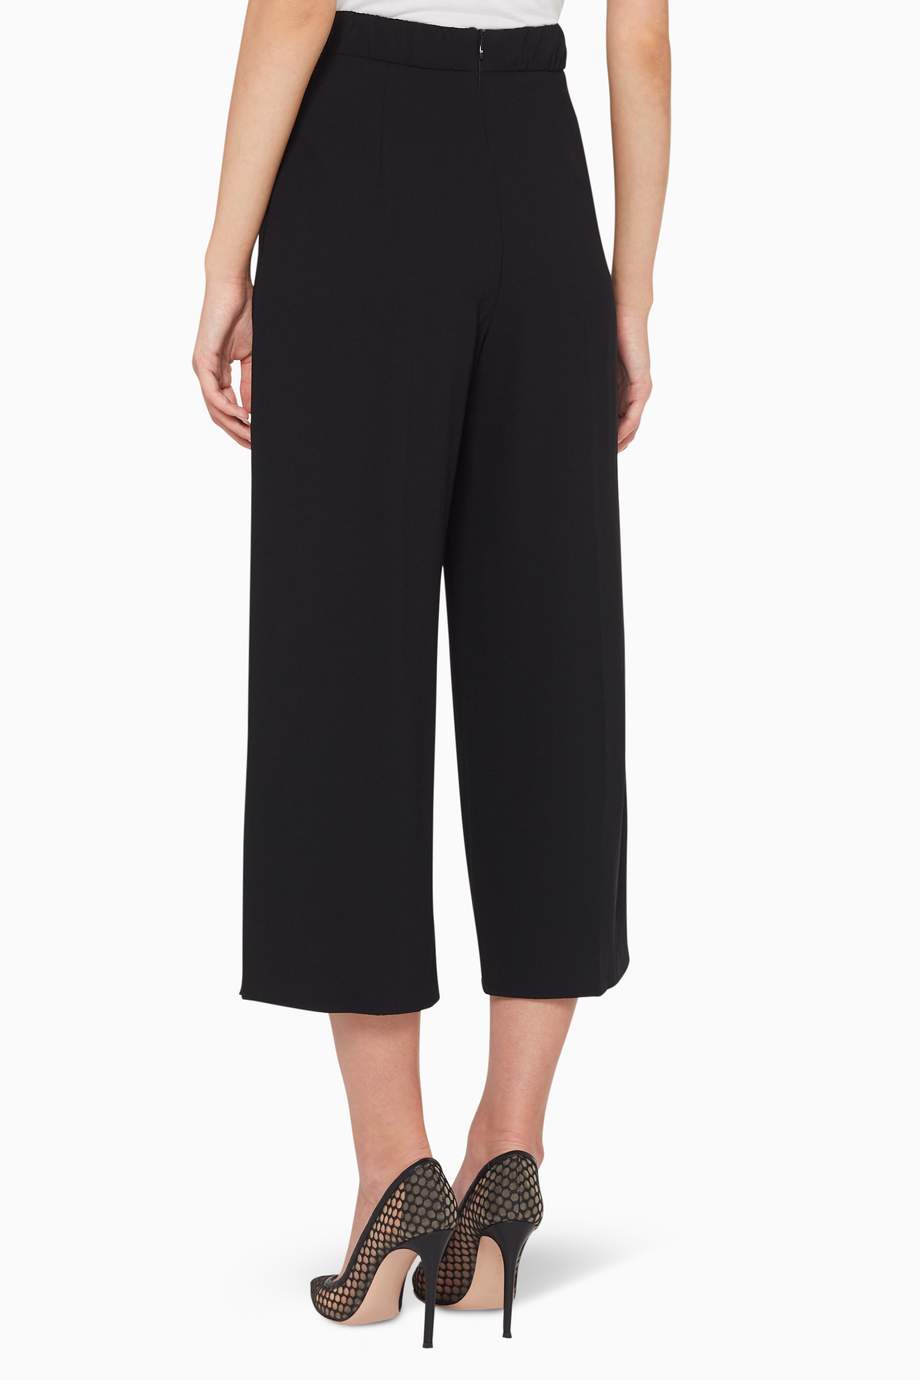 Shop Elisabetta Franchi Black Cropped High Waistline Pants for Women ...